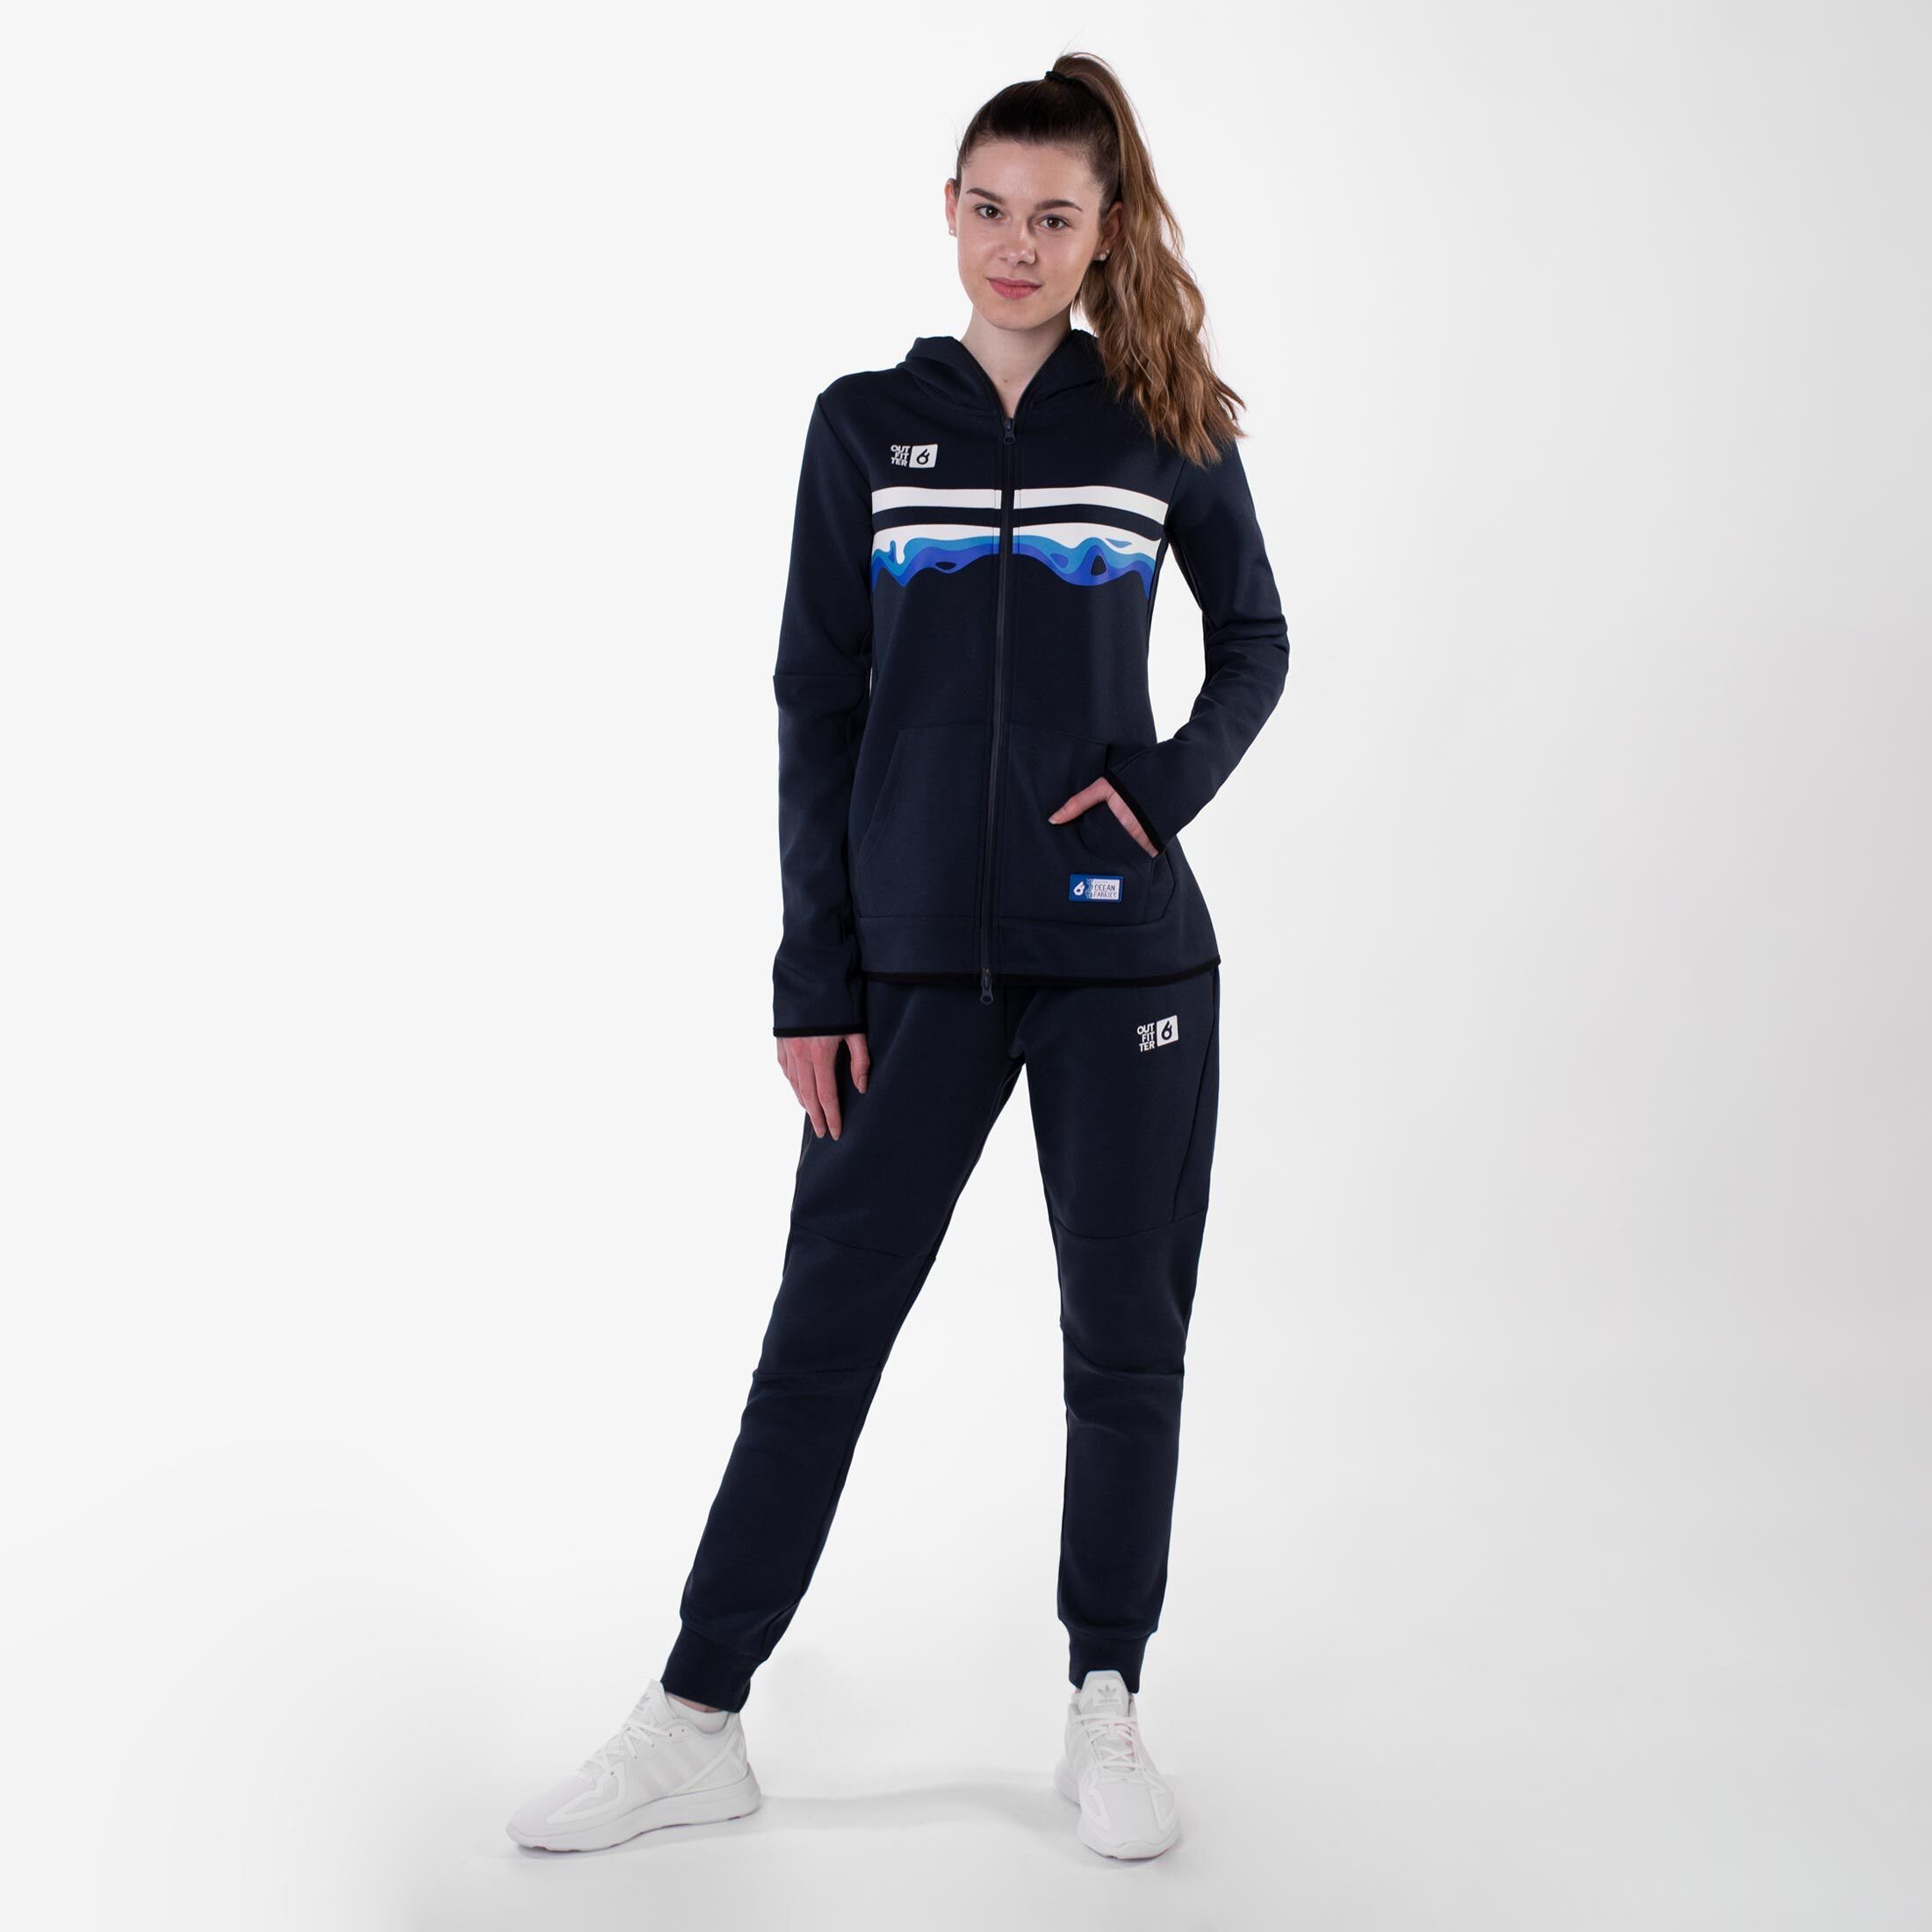 Outfitter Trainingsanzug Ocean Fabrics Jogginganzug Damen dunkelblau